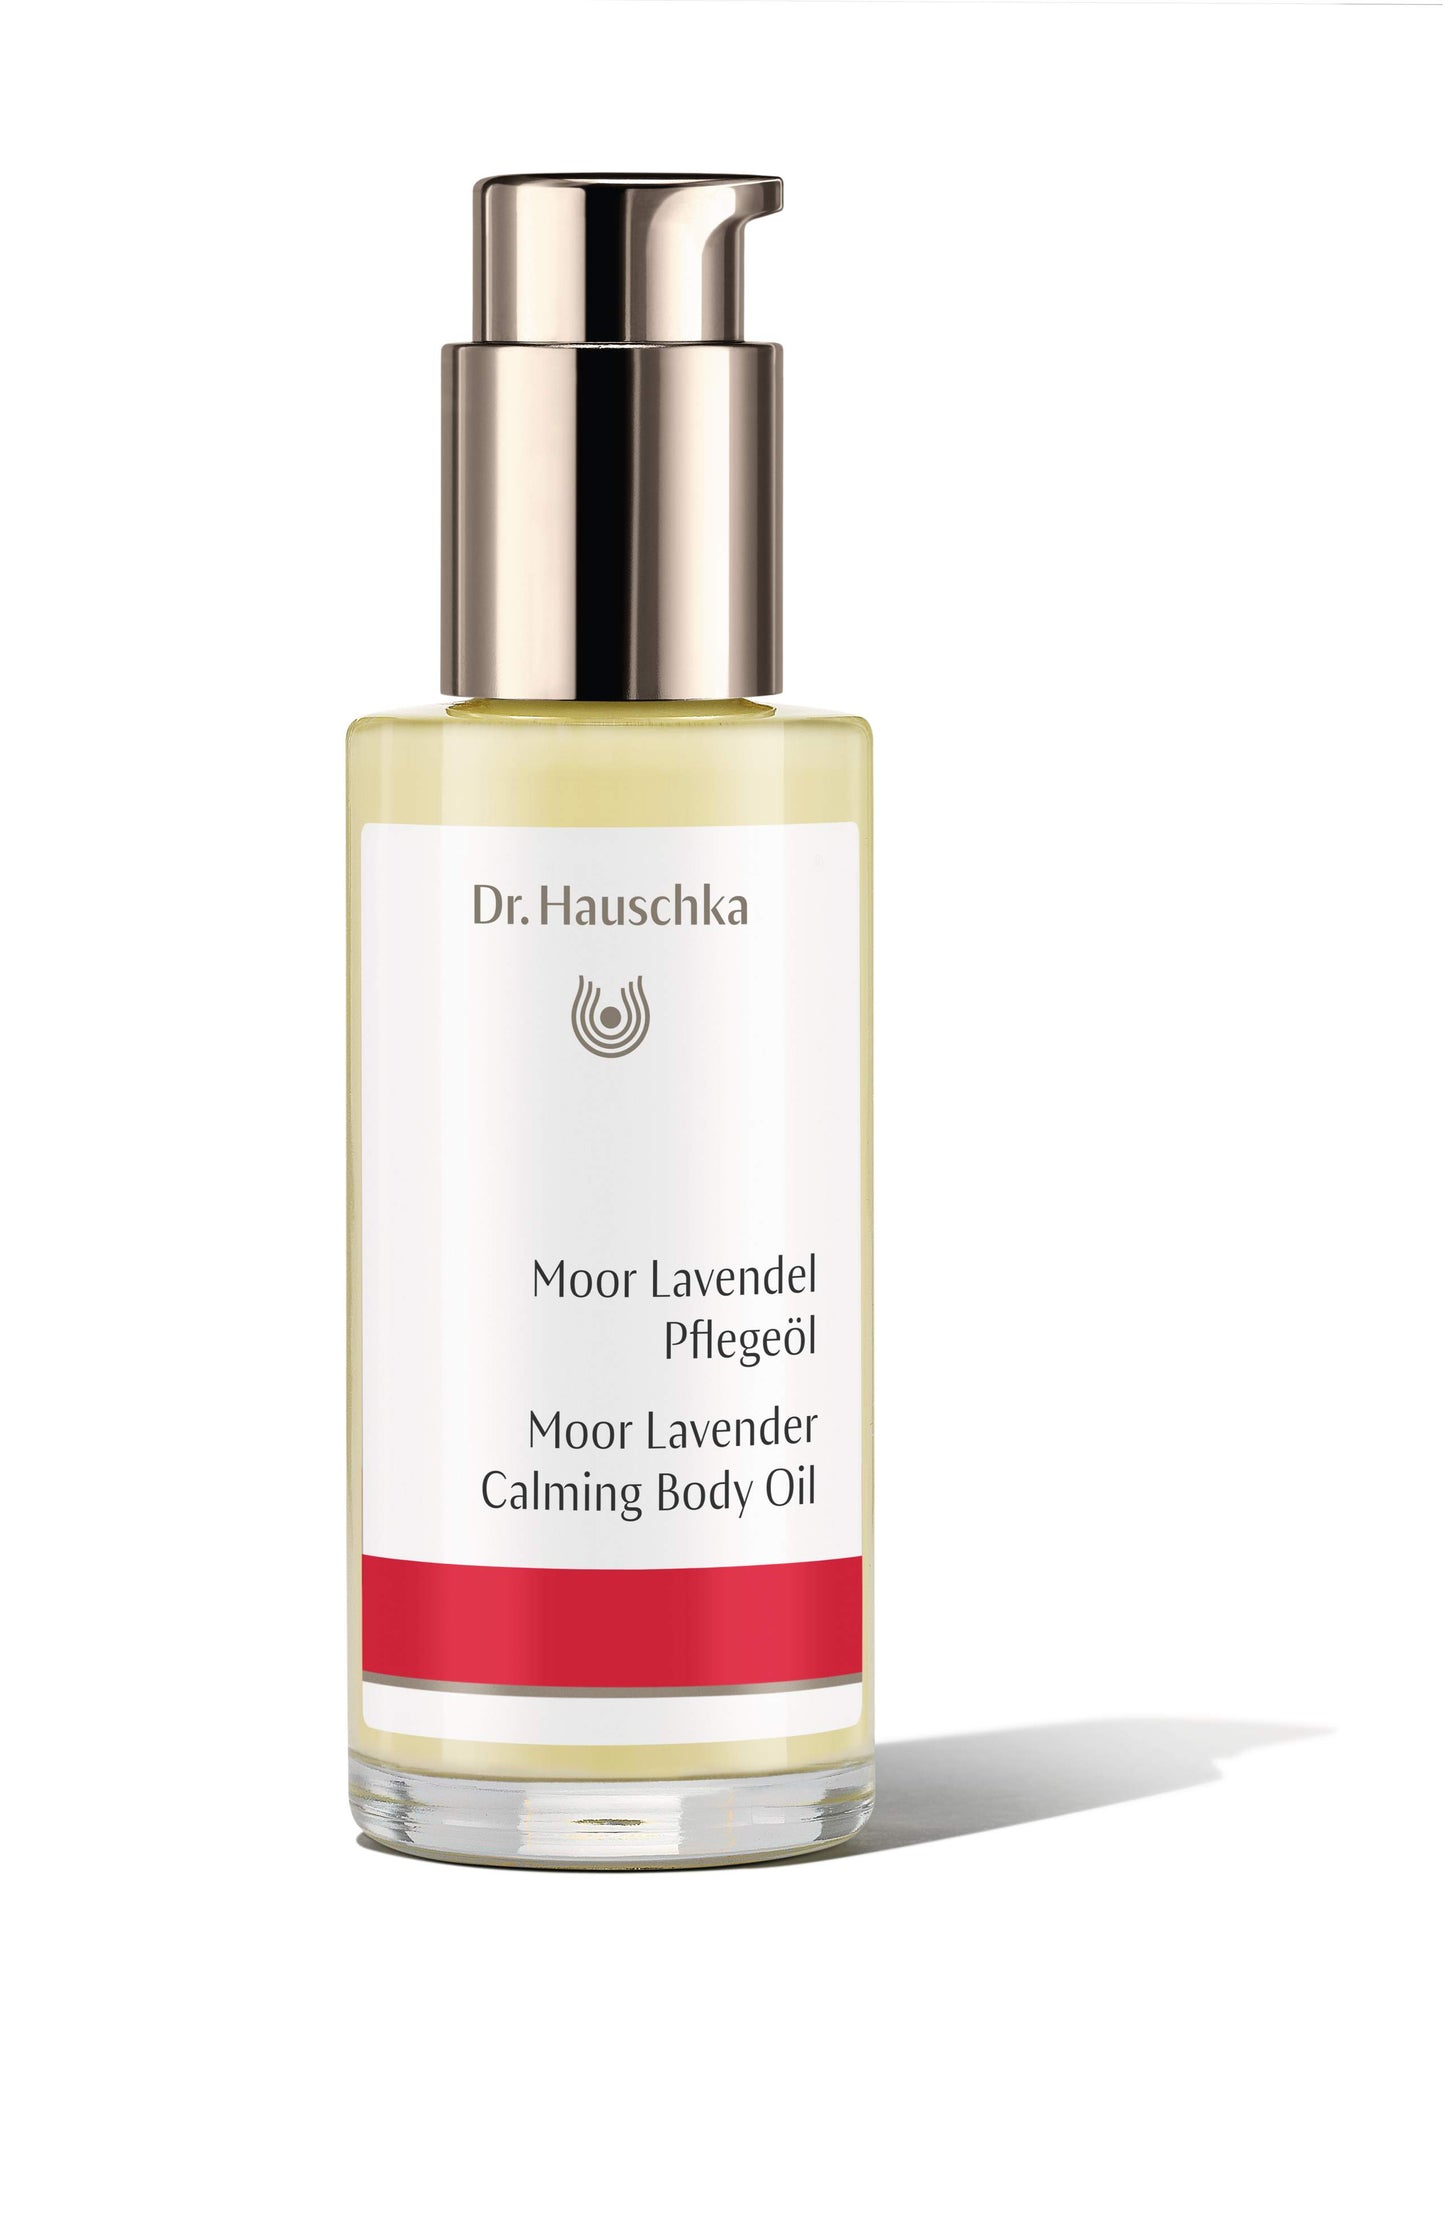 Dr. Hauschka - Moor Lavendel Pflegeöl - 75 ml